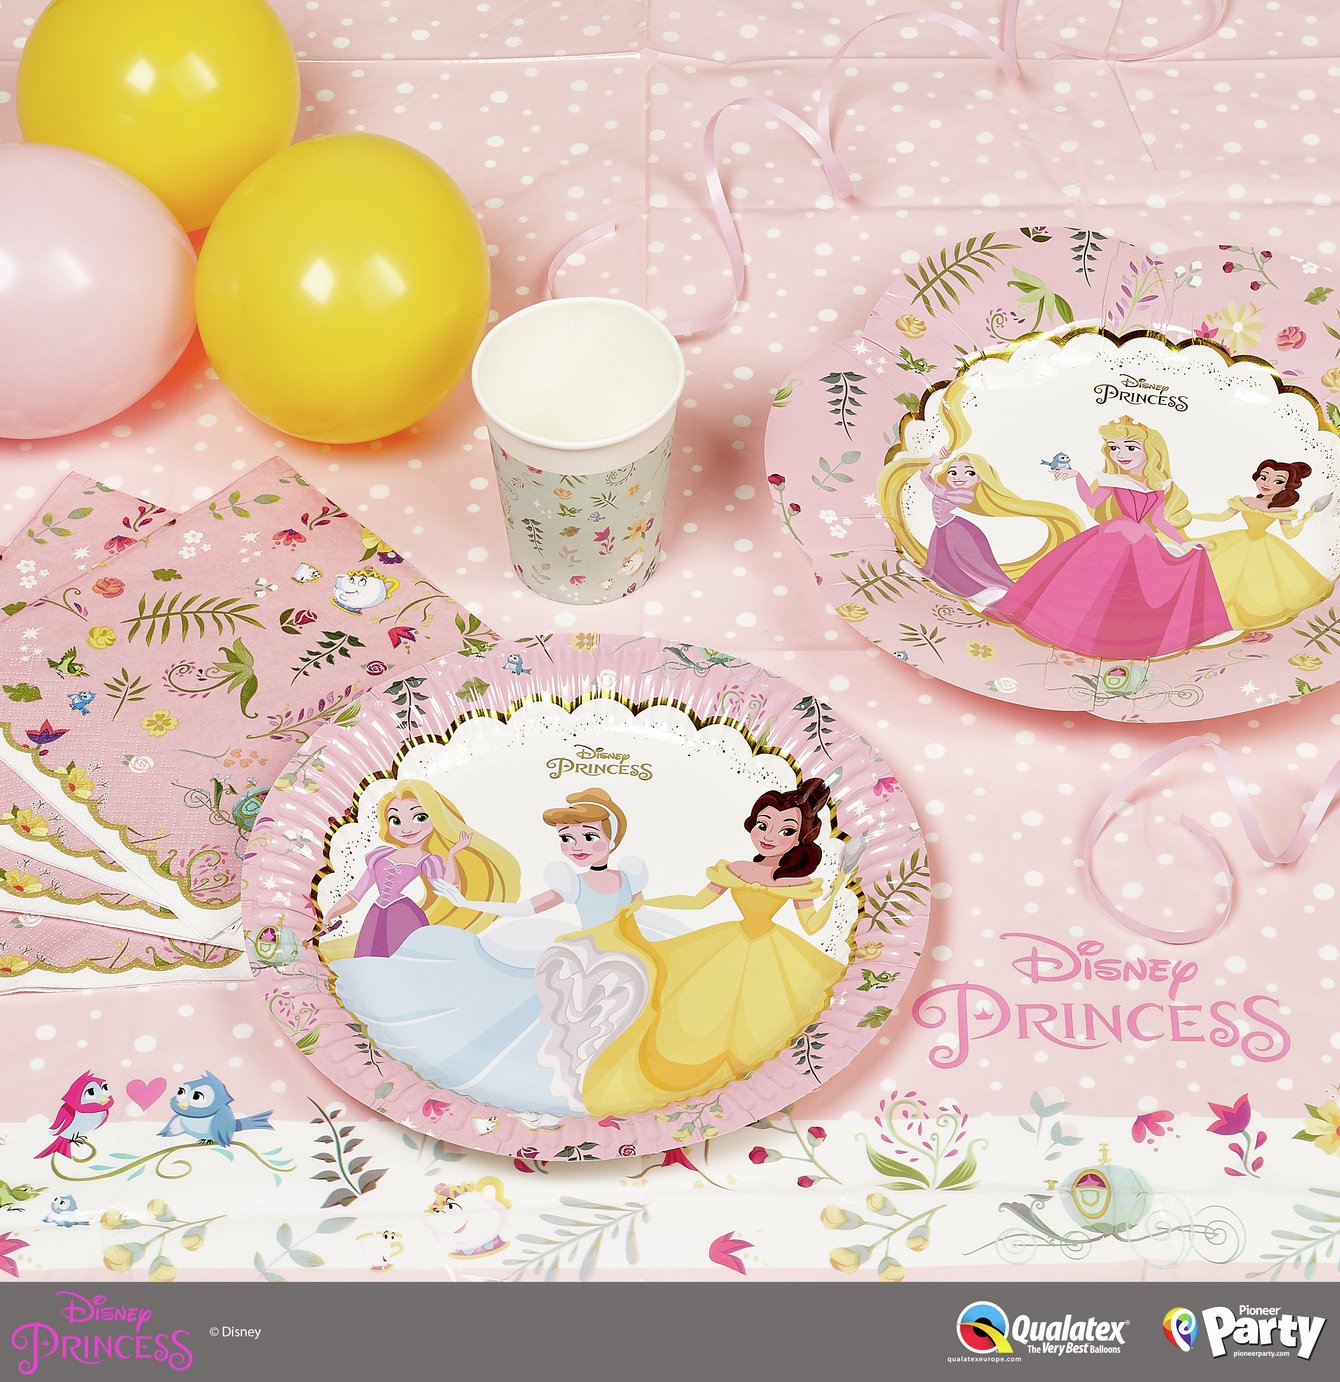 Disney Princess Premium Party Pack for 16 Guests